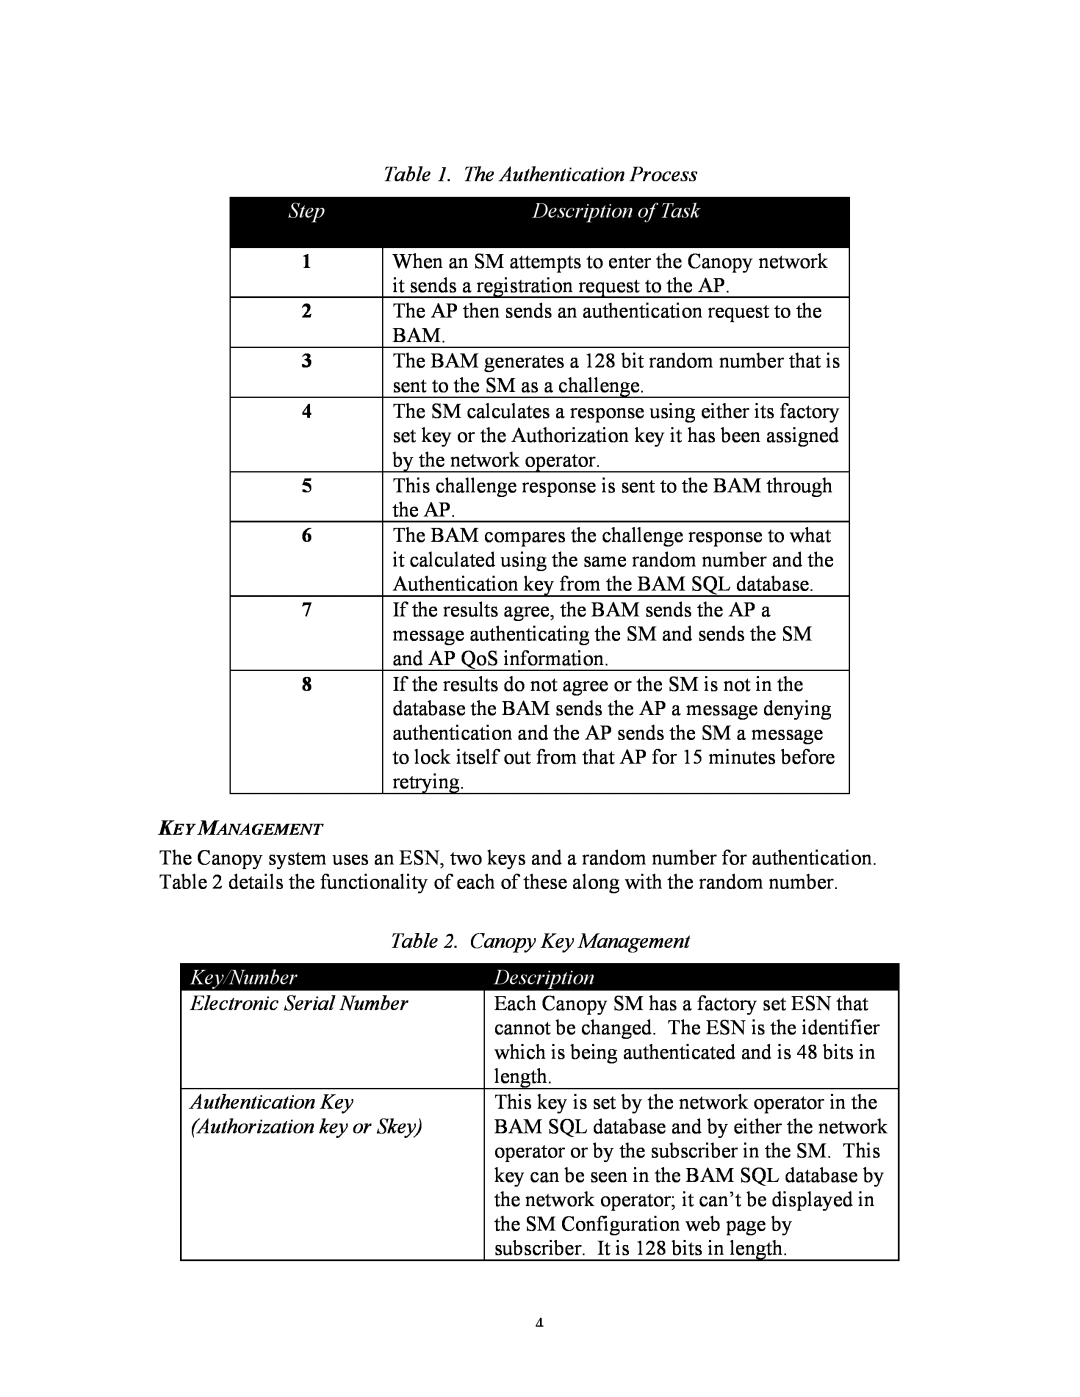 Motorola Wireless Broadband Platform manual Step, Description of Task, Key/Number, The Authentication Process 